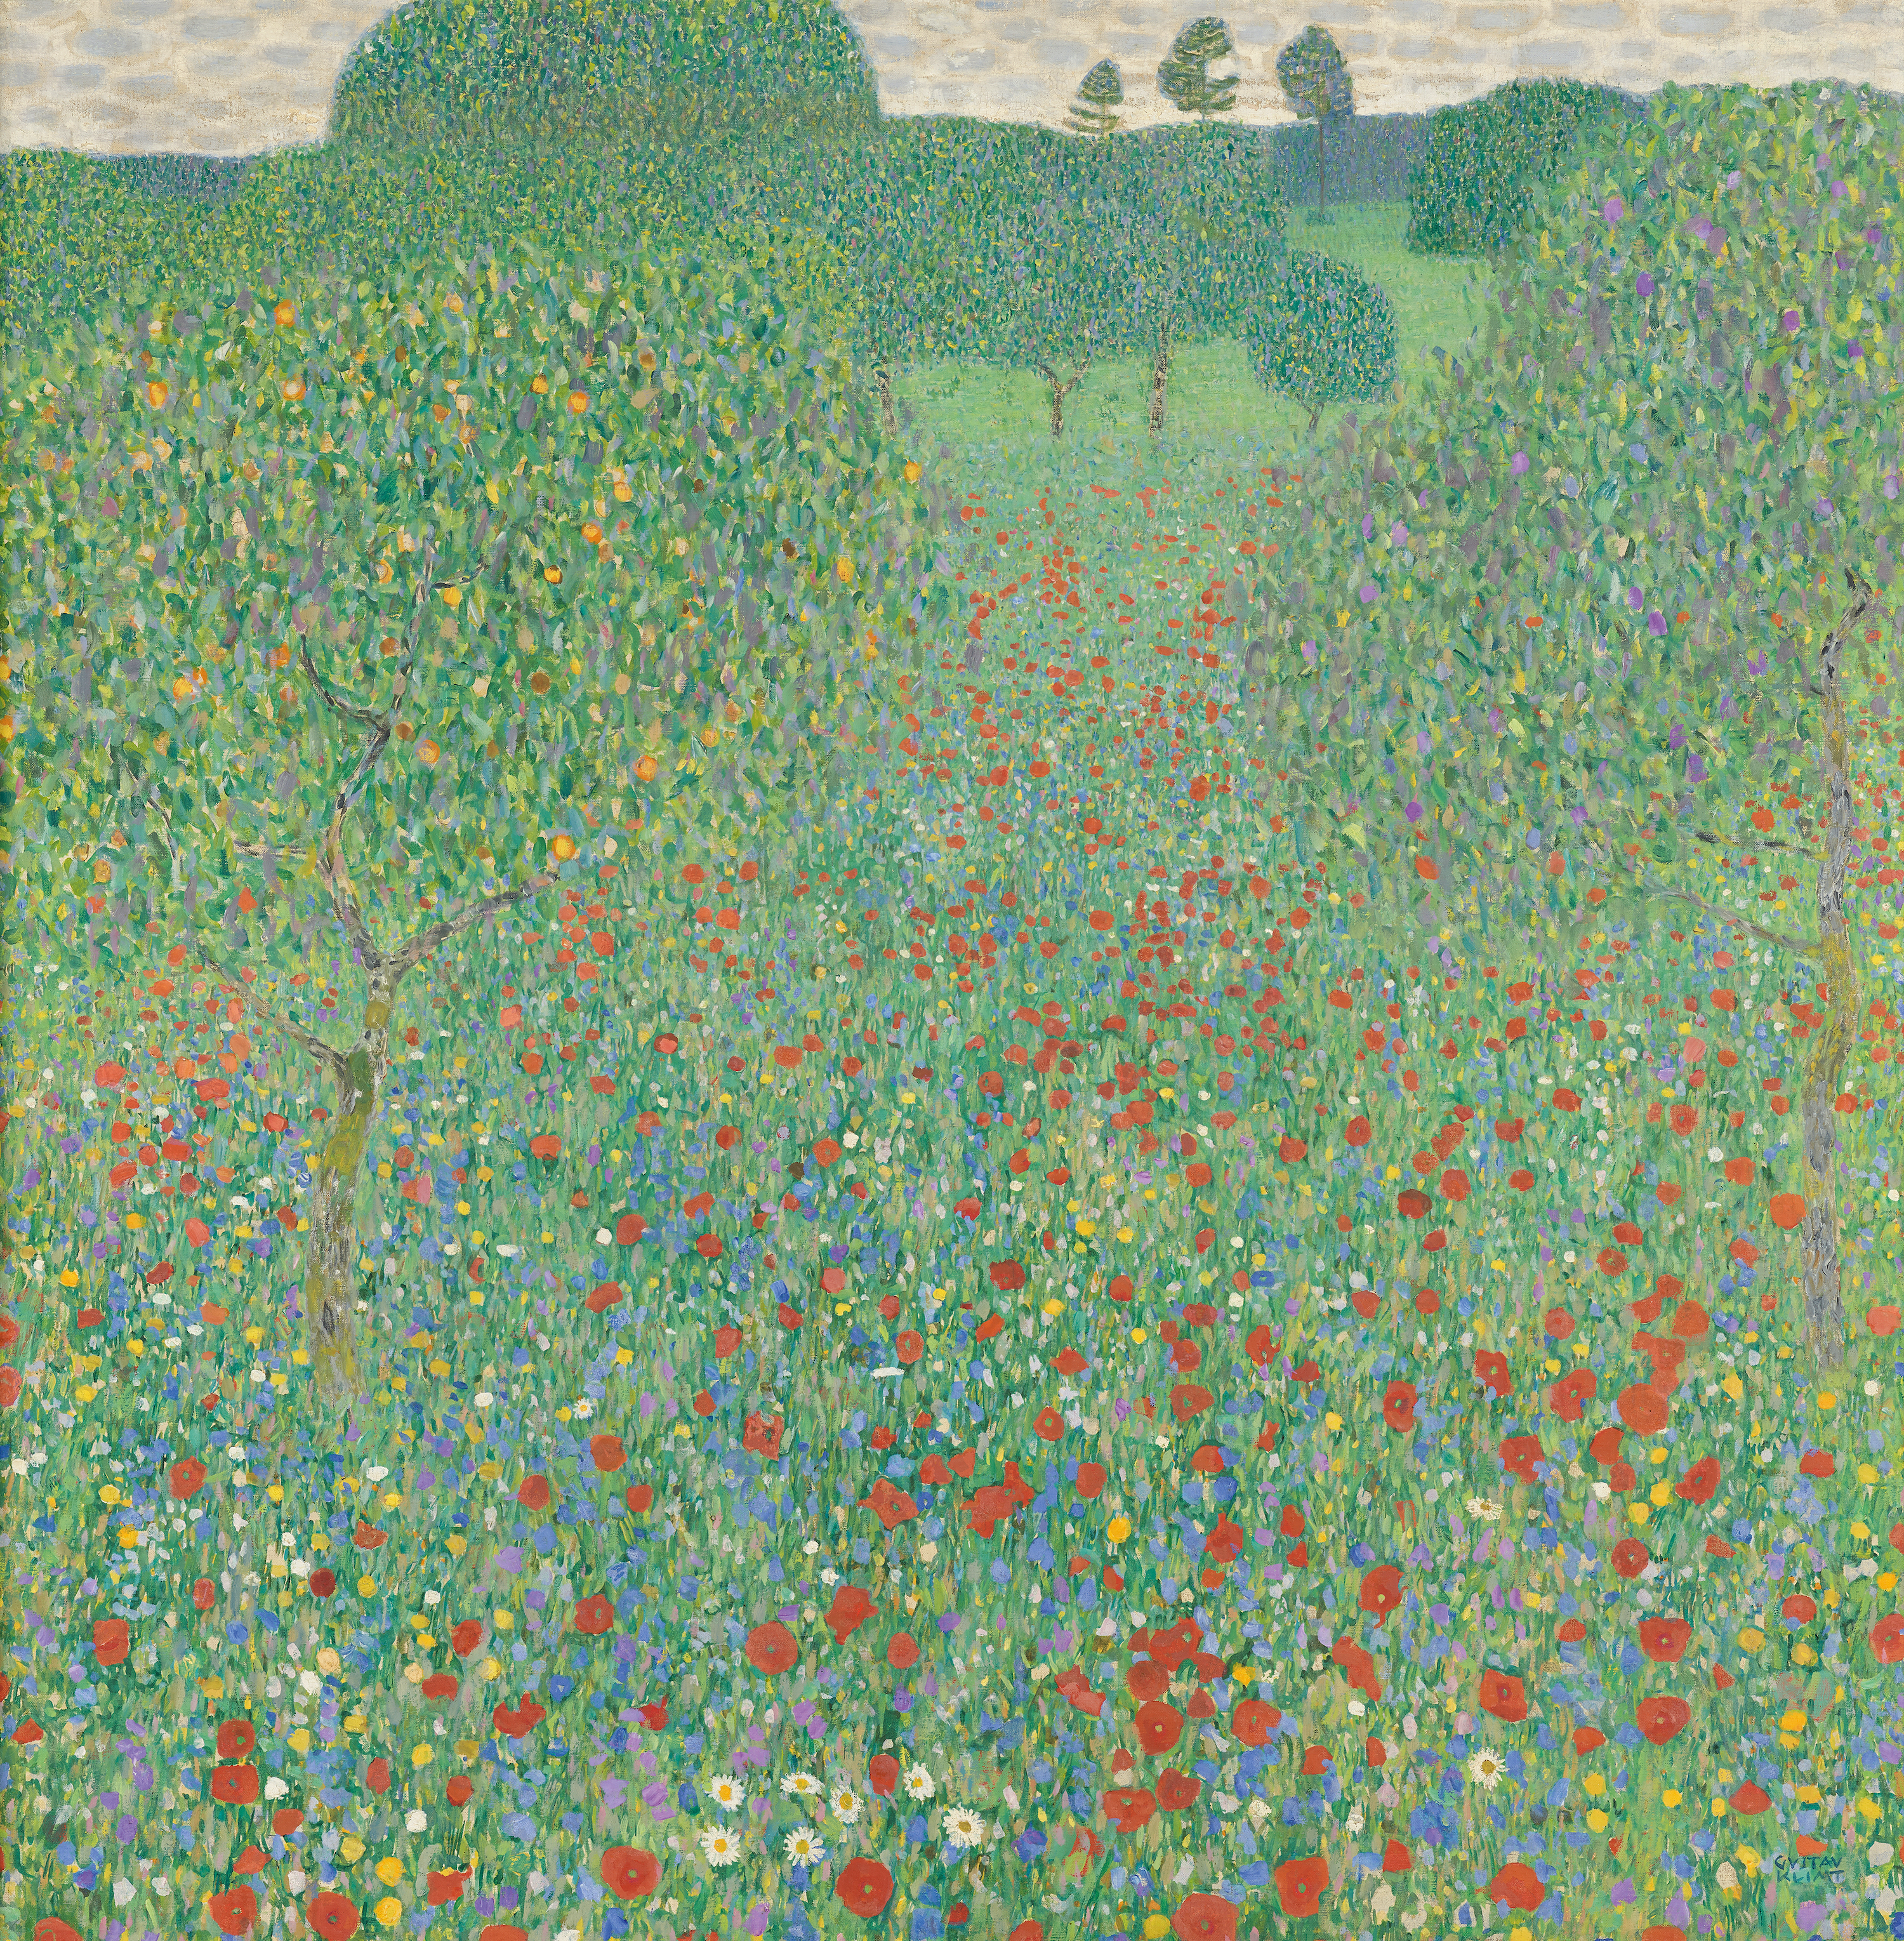 Gelincik Tarlası by Gustav Klimt - 1907 - 110 x 110 cm 